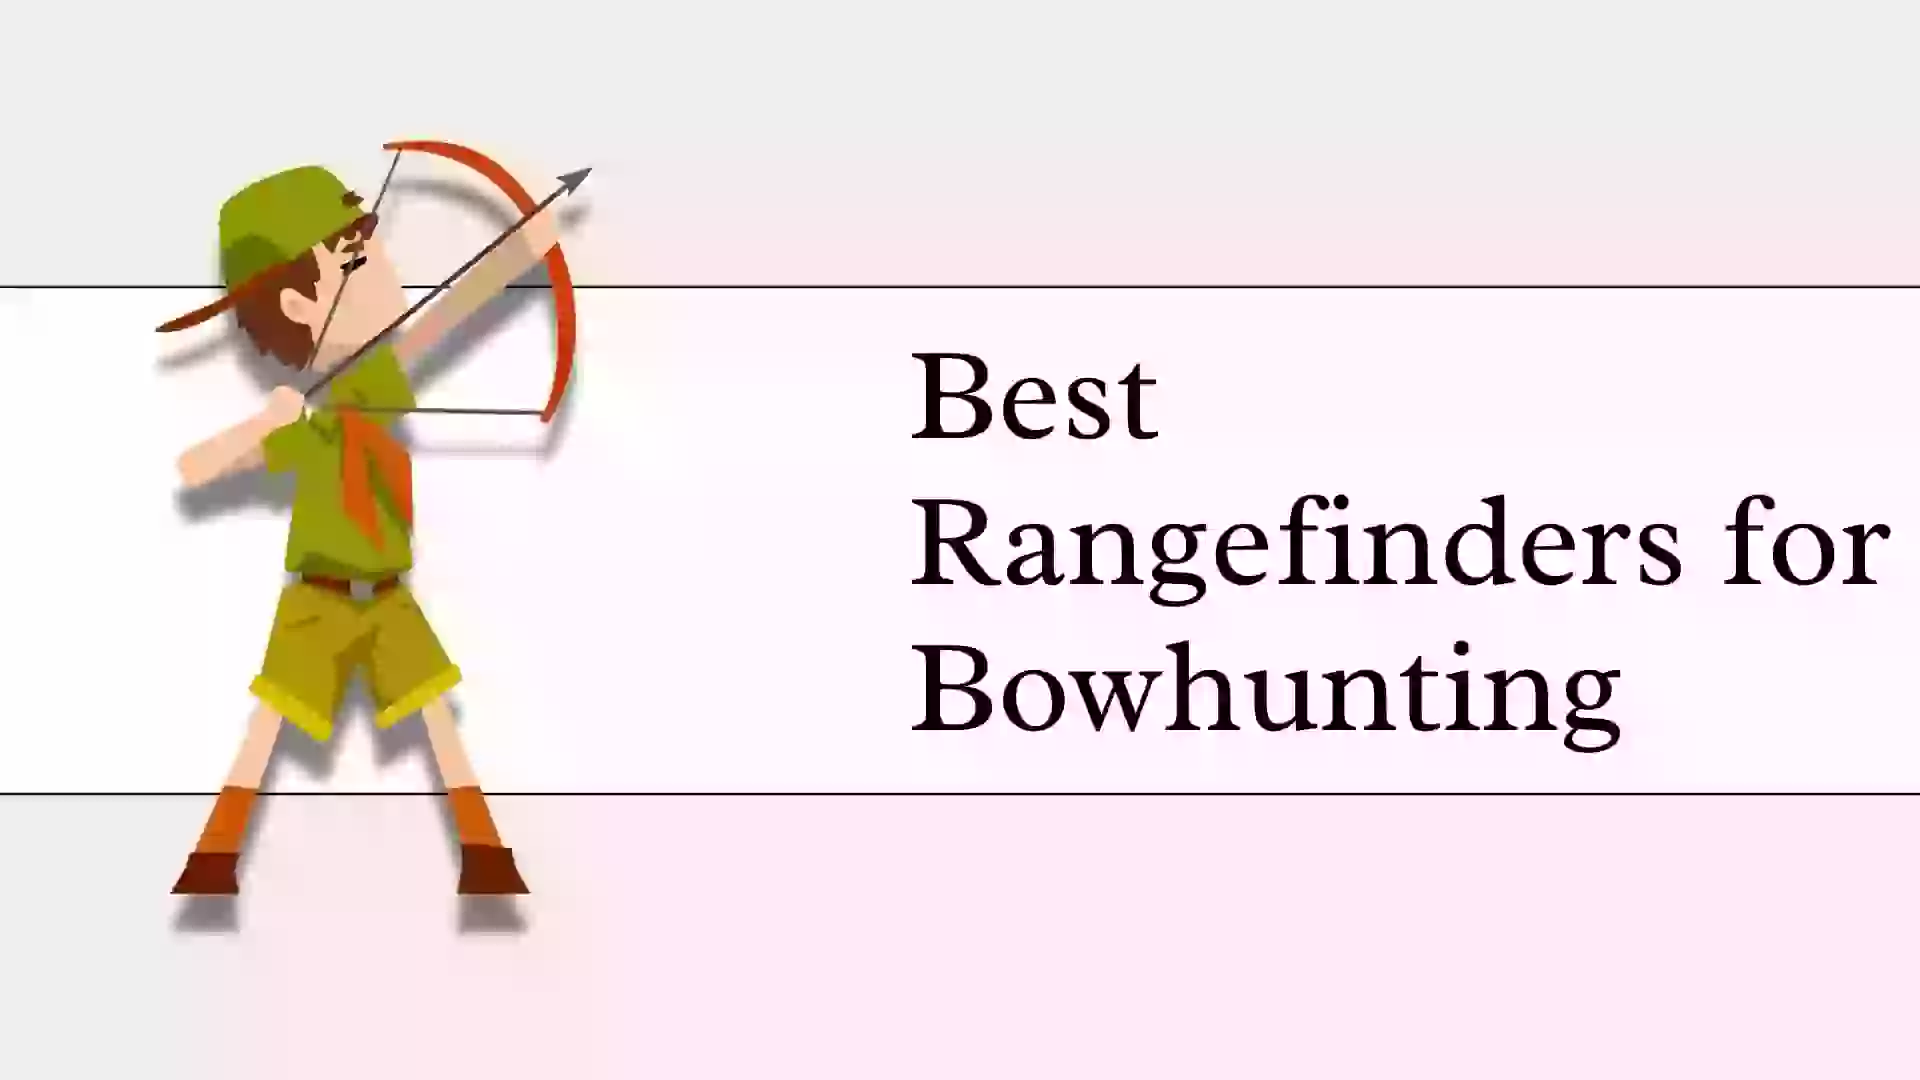 Best Rangefinders for Bowhunting